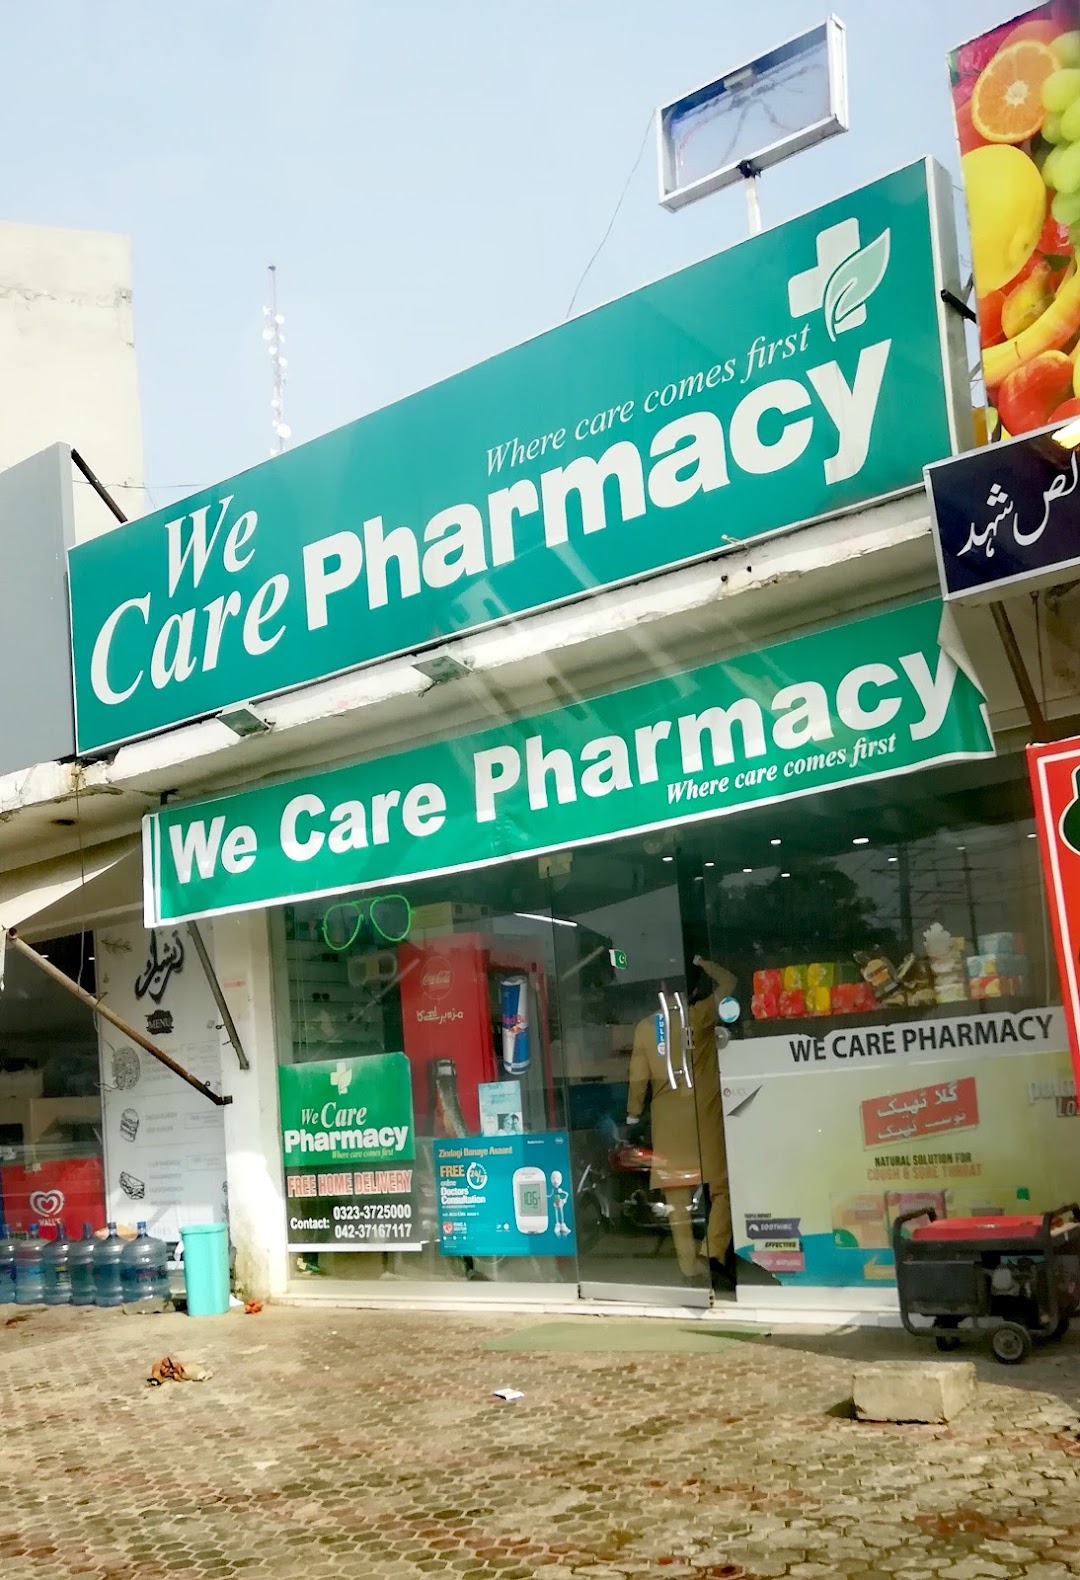 We Care Pharmacy